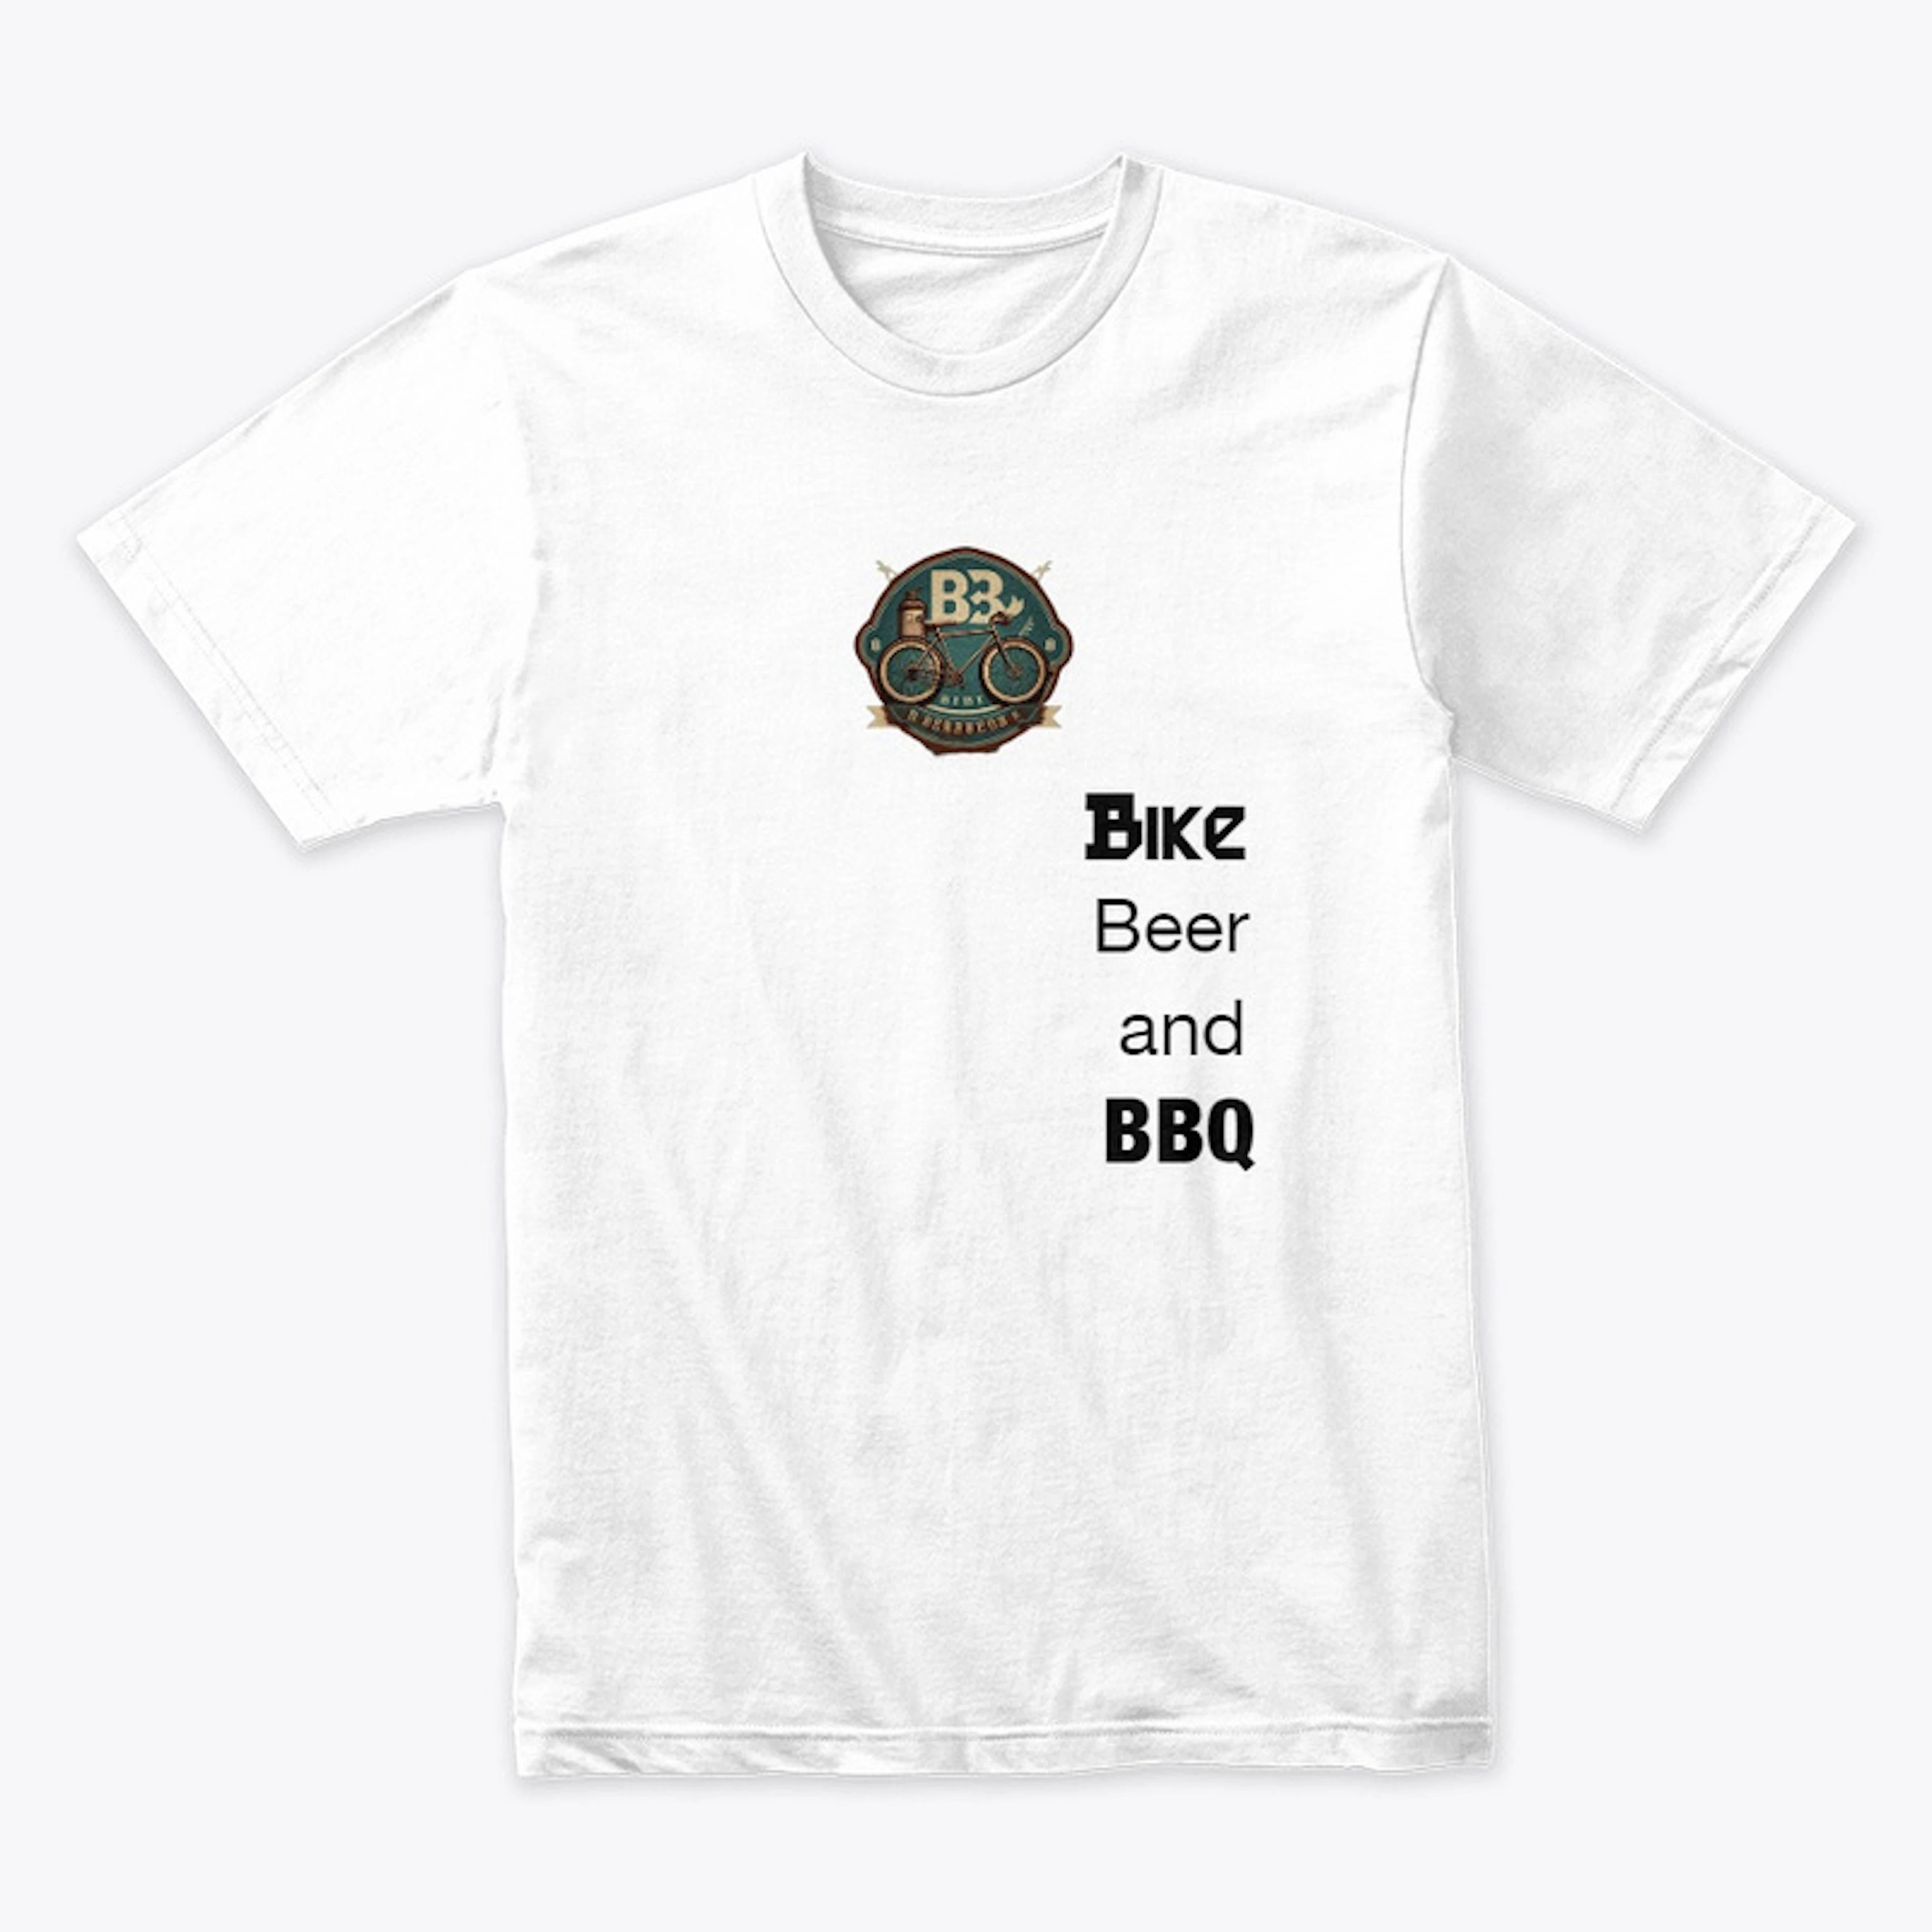 (B3) Bike Beer and BBQ